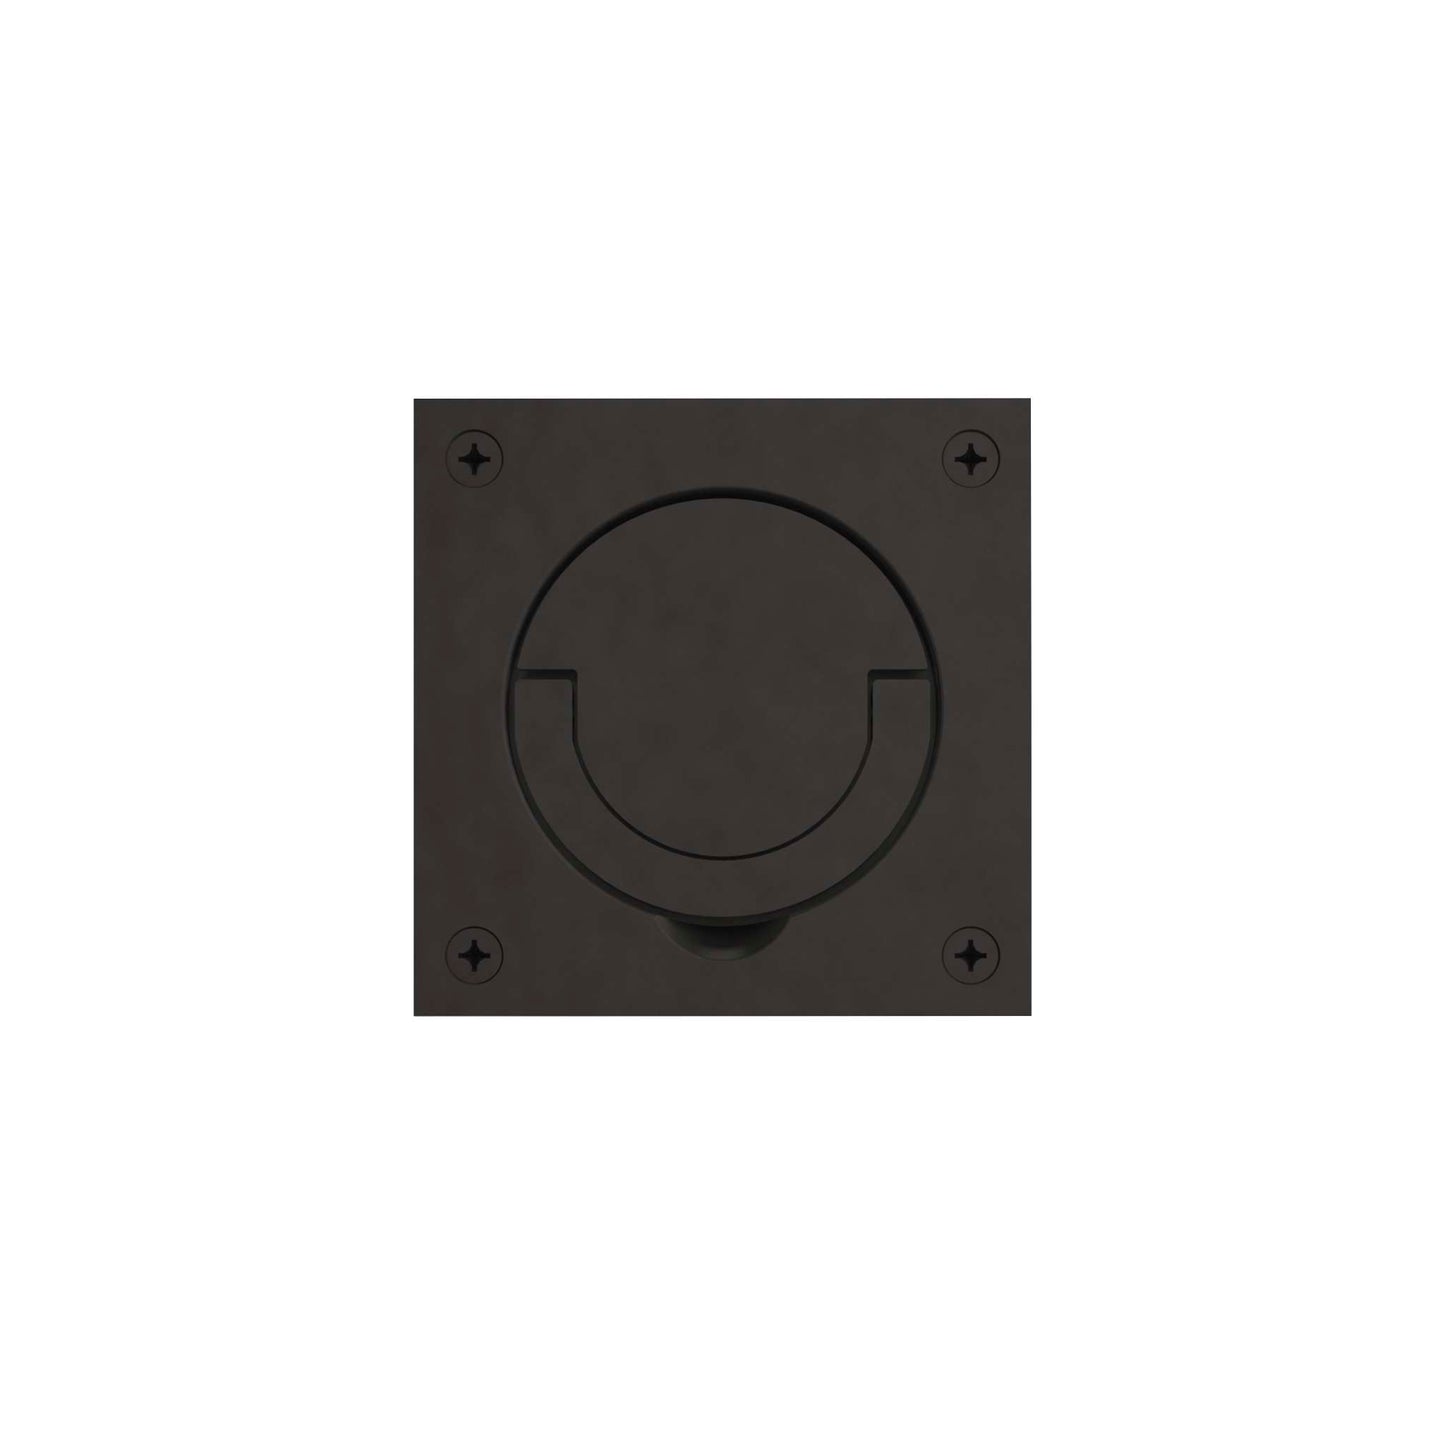 Baldwin Hardware Corporation - Estate - 0397 - Flush Ring Pull